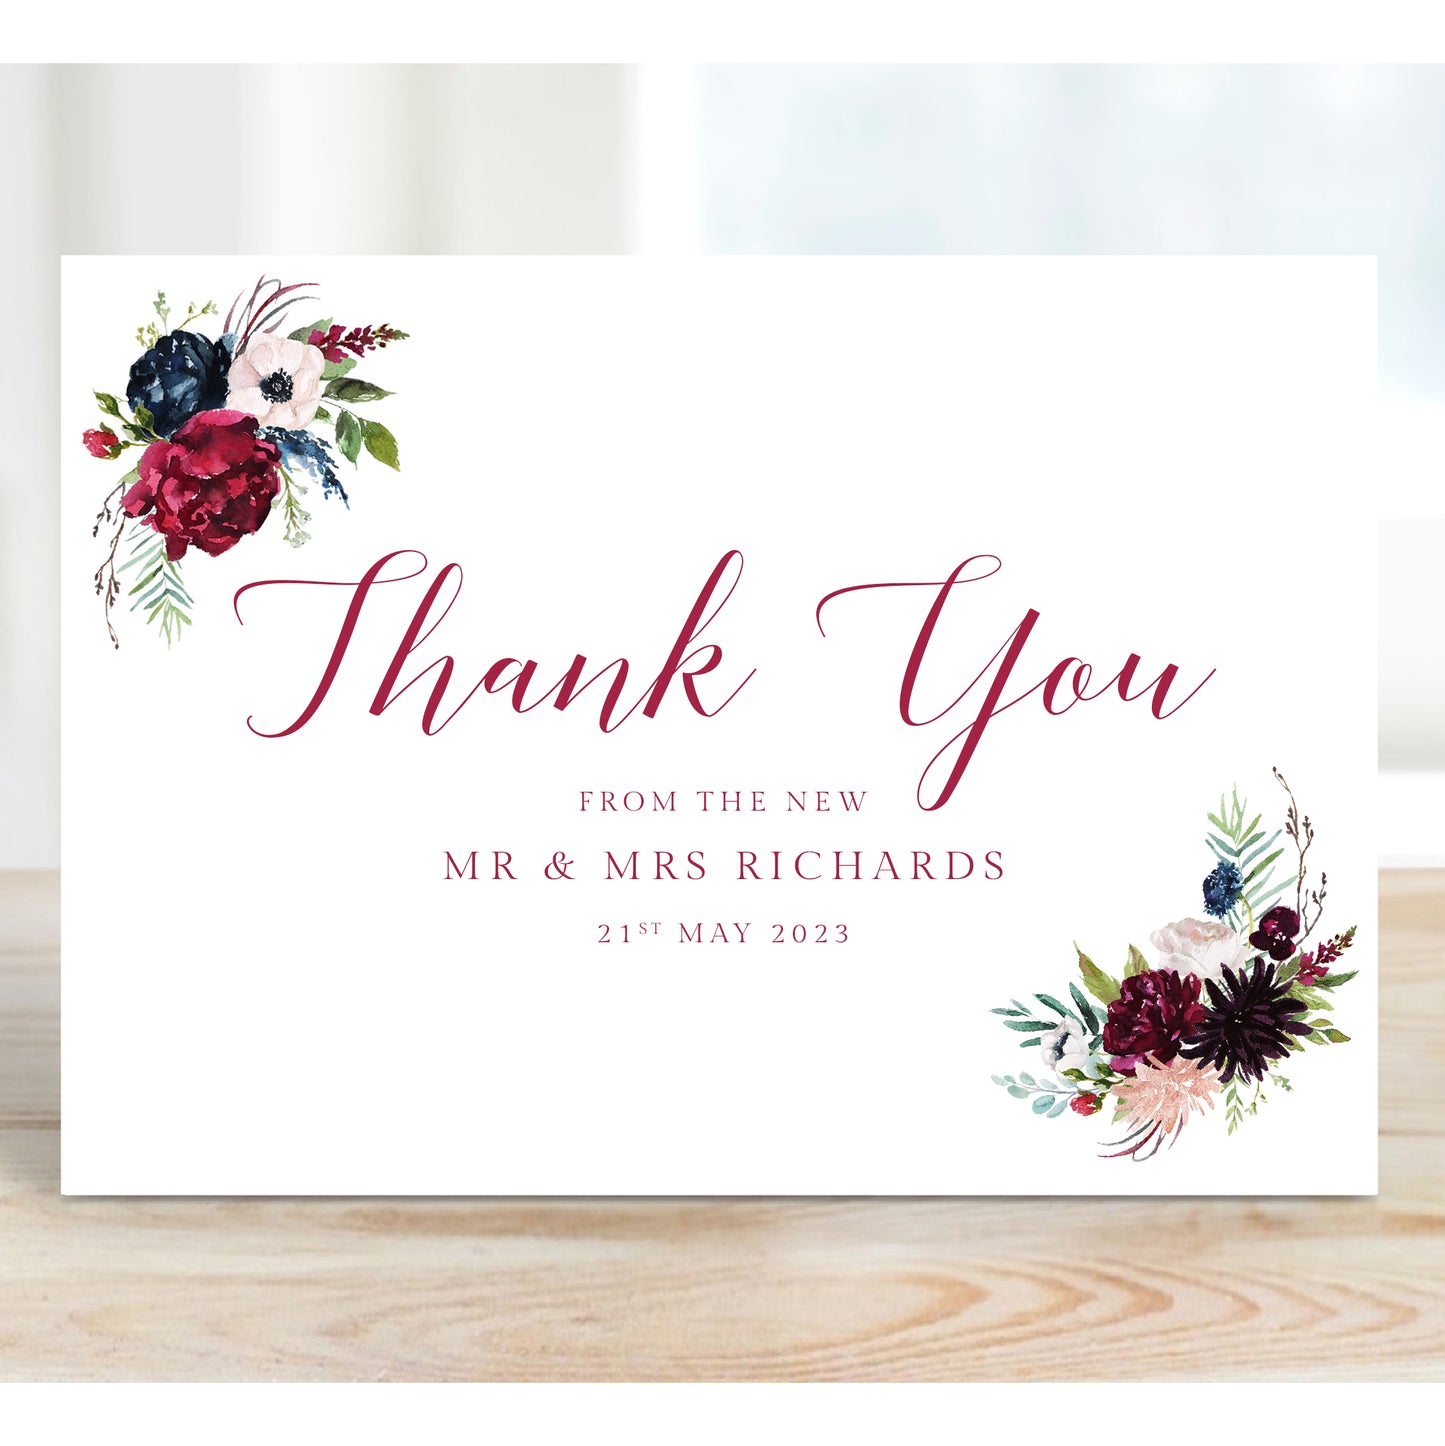 Customized Wedding Thank You Cards, Burgundy Floral Design